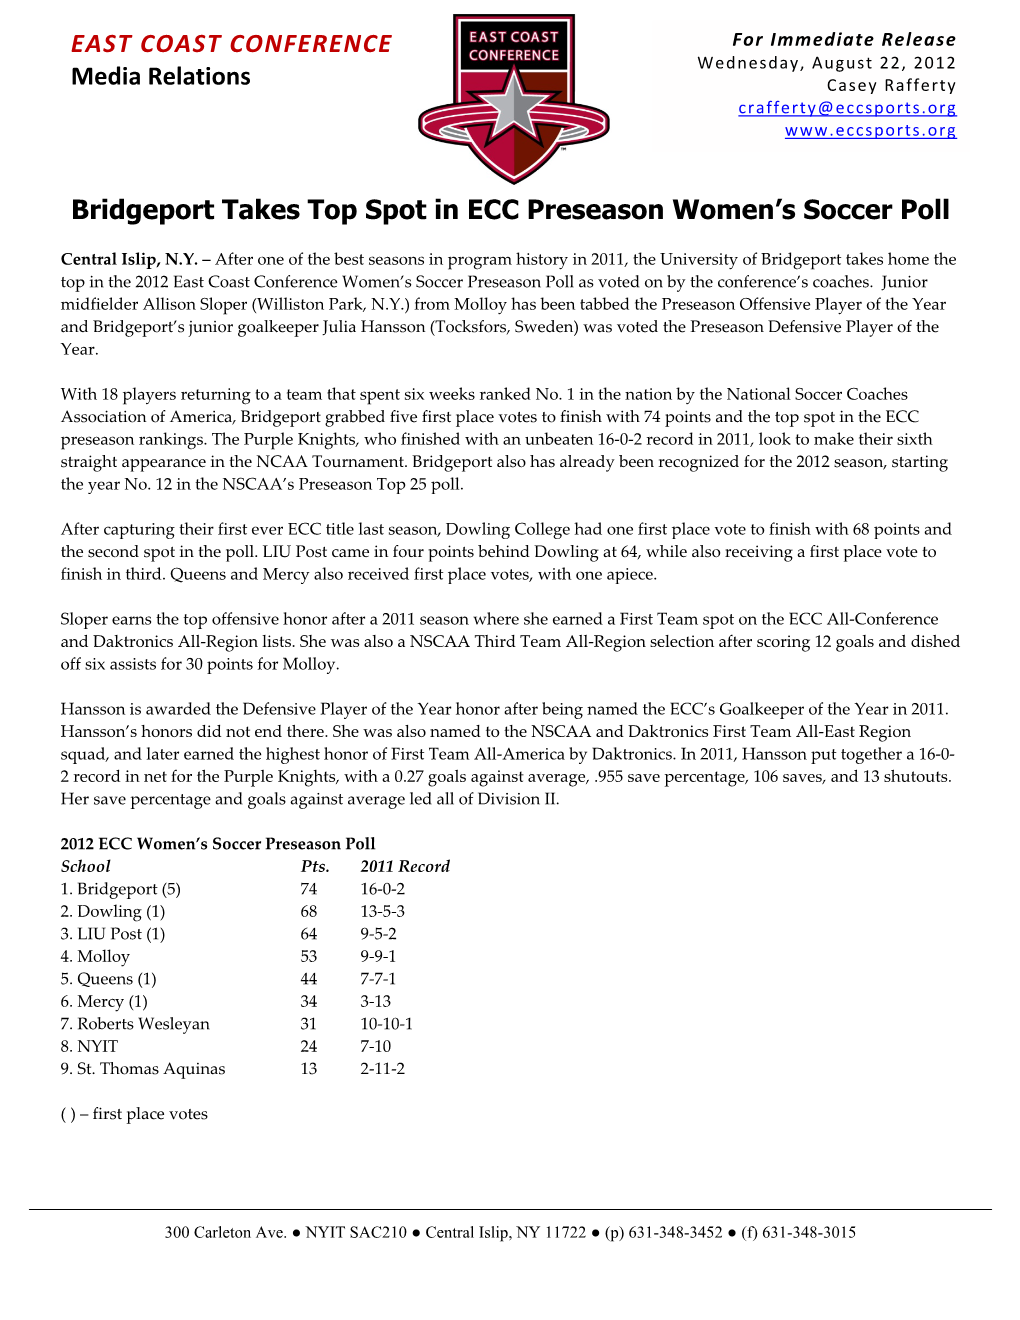 Bridgeport Takes Top Spot in ECC Preseason Women's Soccer Poll EAST COAST CONFERENCE Media Relations